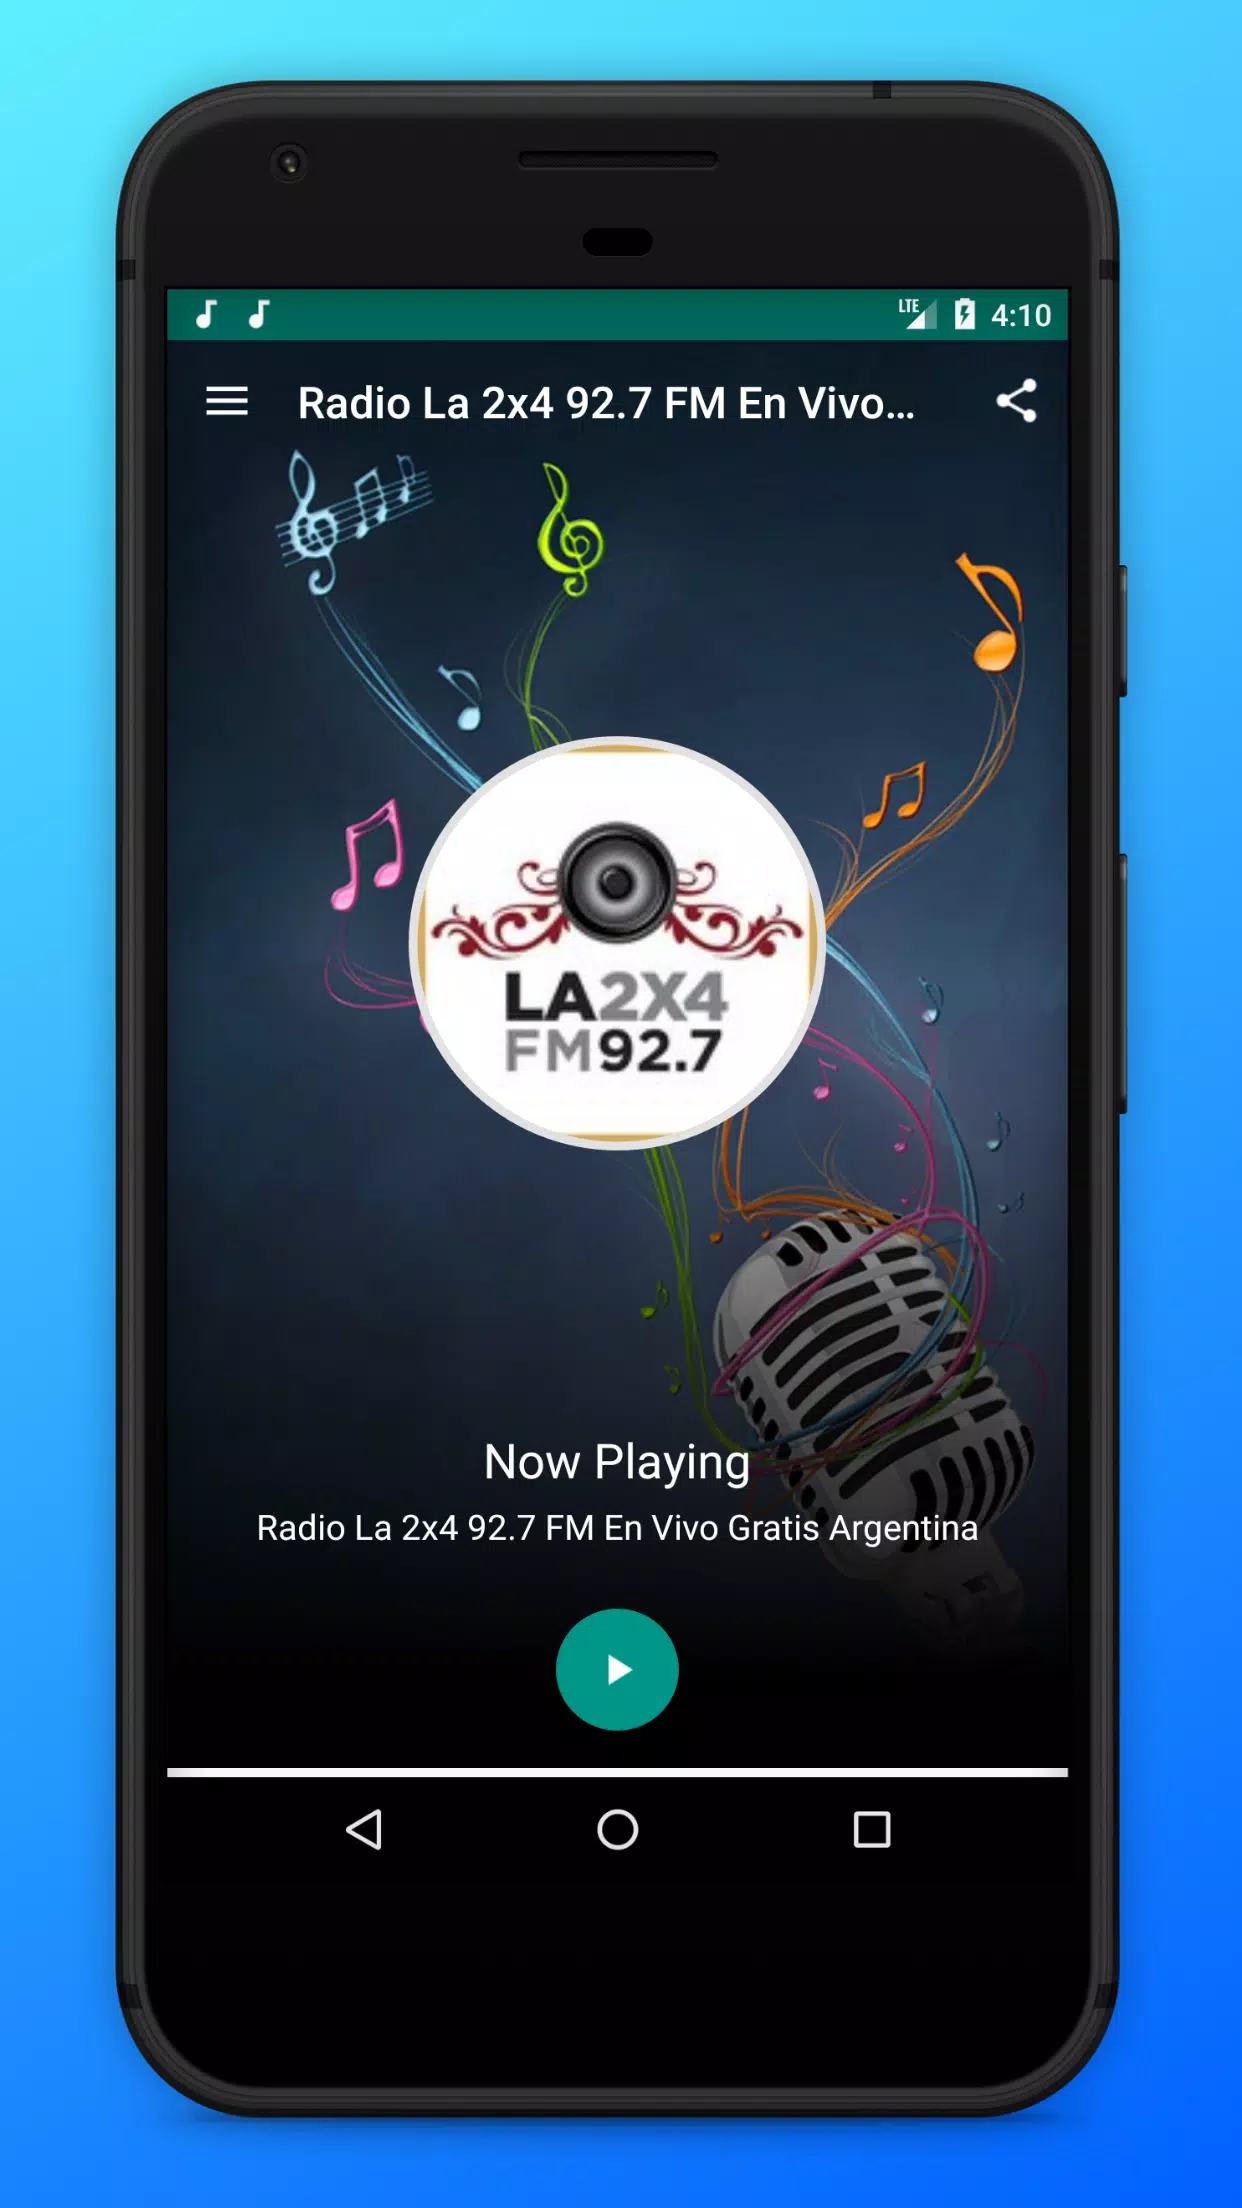 La 2x4 FM Tango Radio en Vivo for Android - APK Download